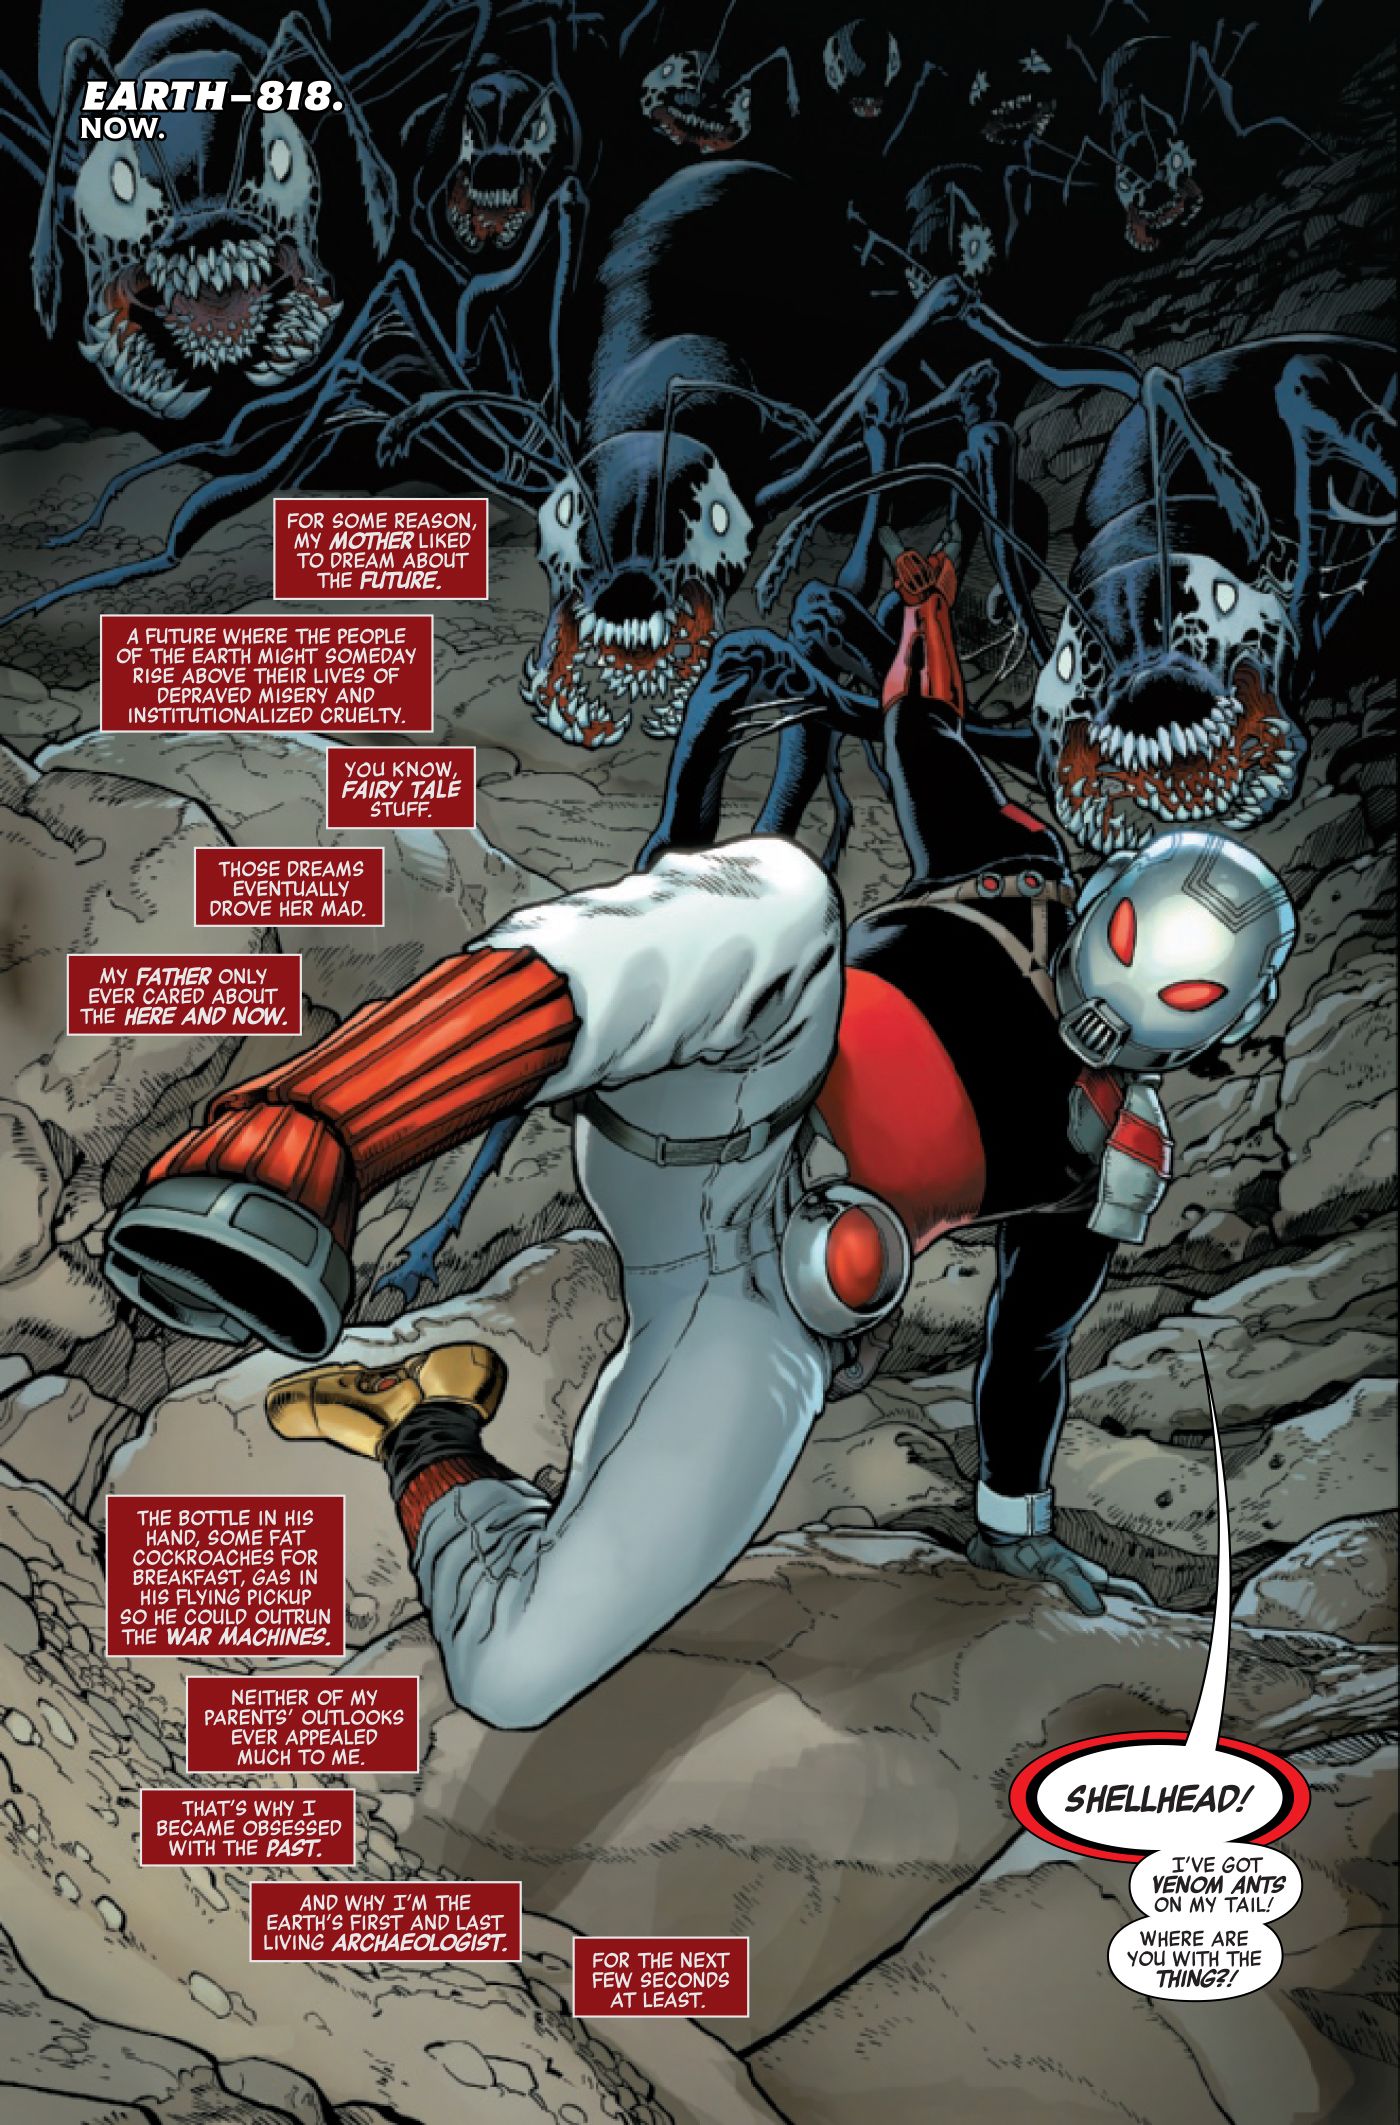 Ant-Man Tony Stark runs away from Venom-bonded ants while giving his backstory.